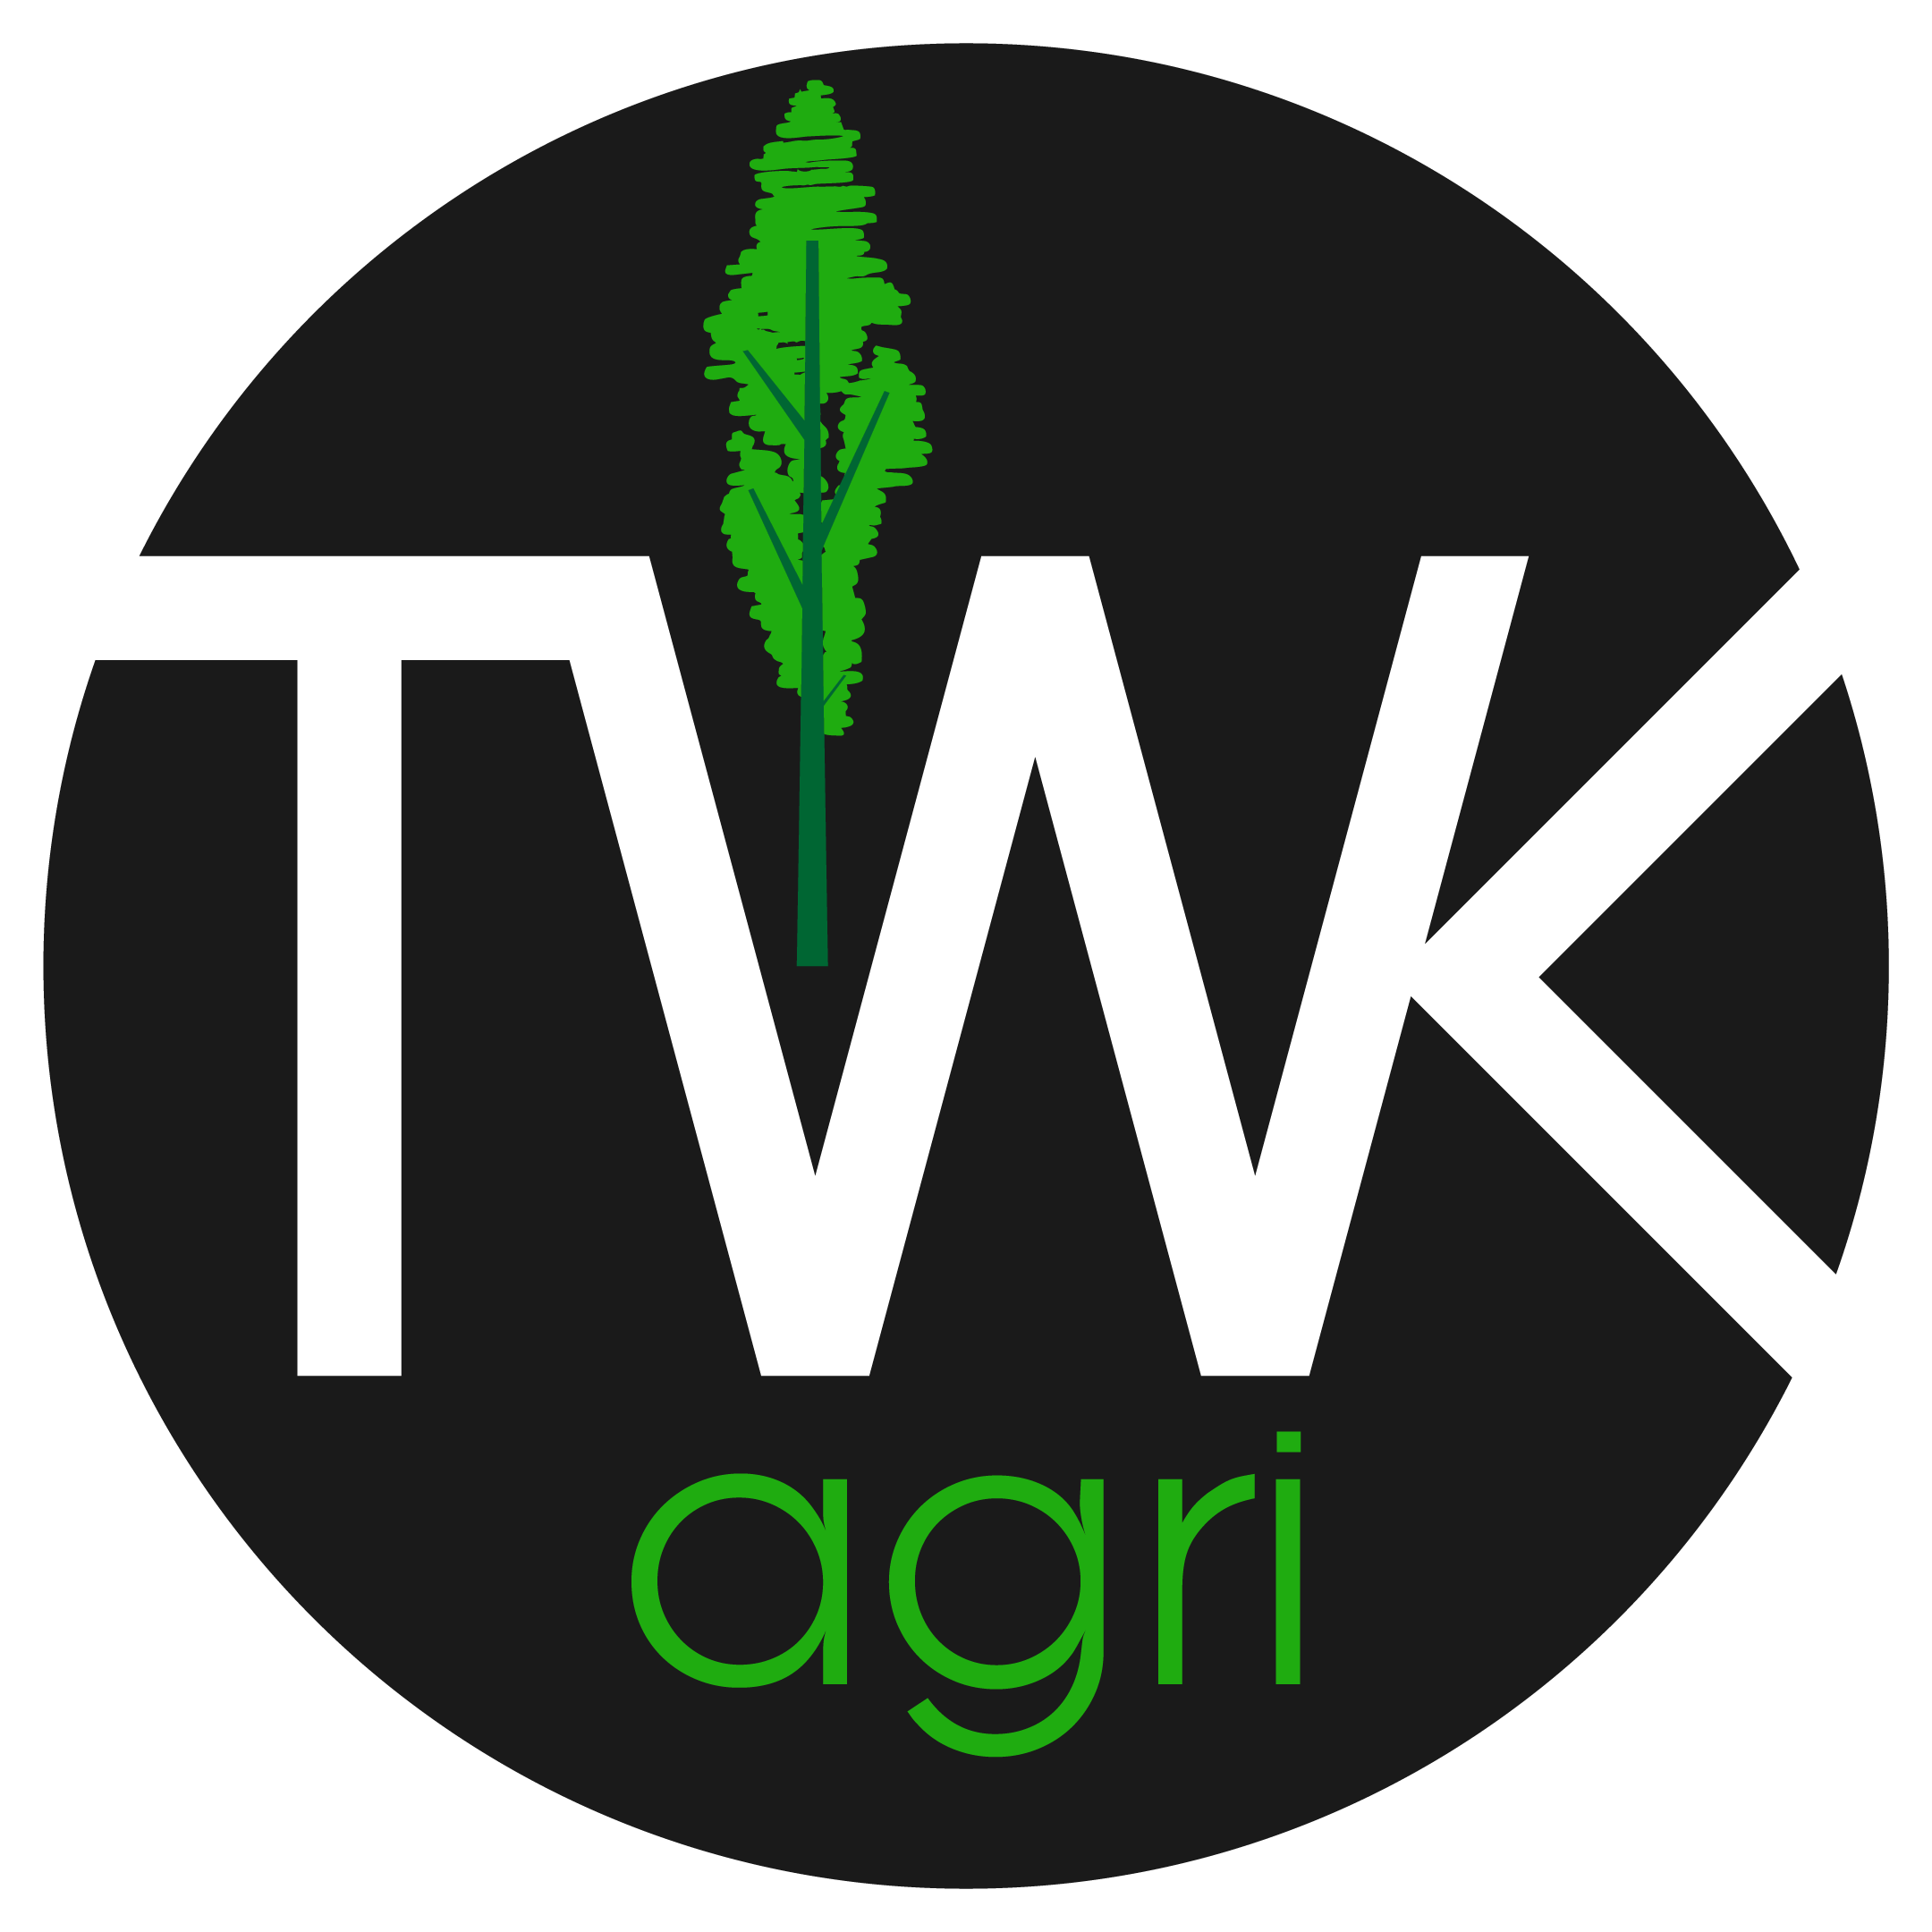 TWK Agri Driver (Code 8)